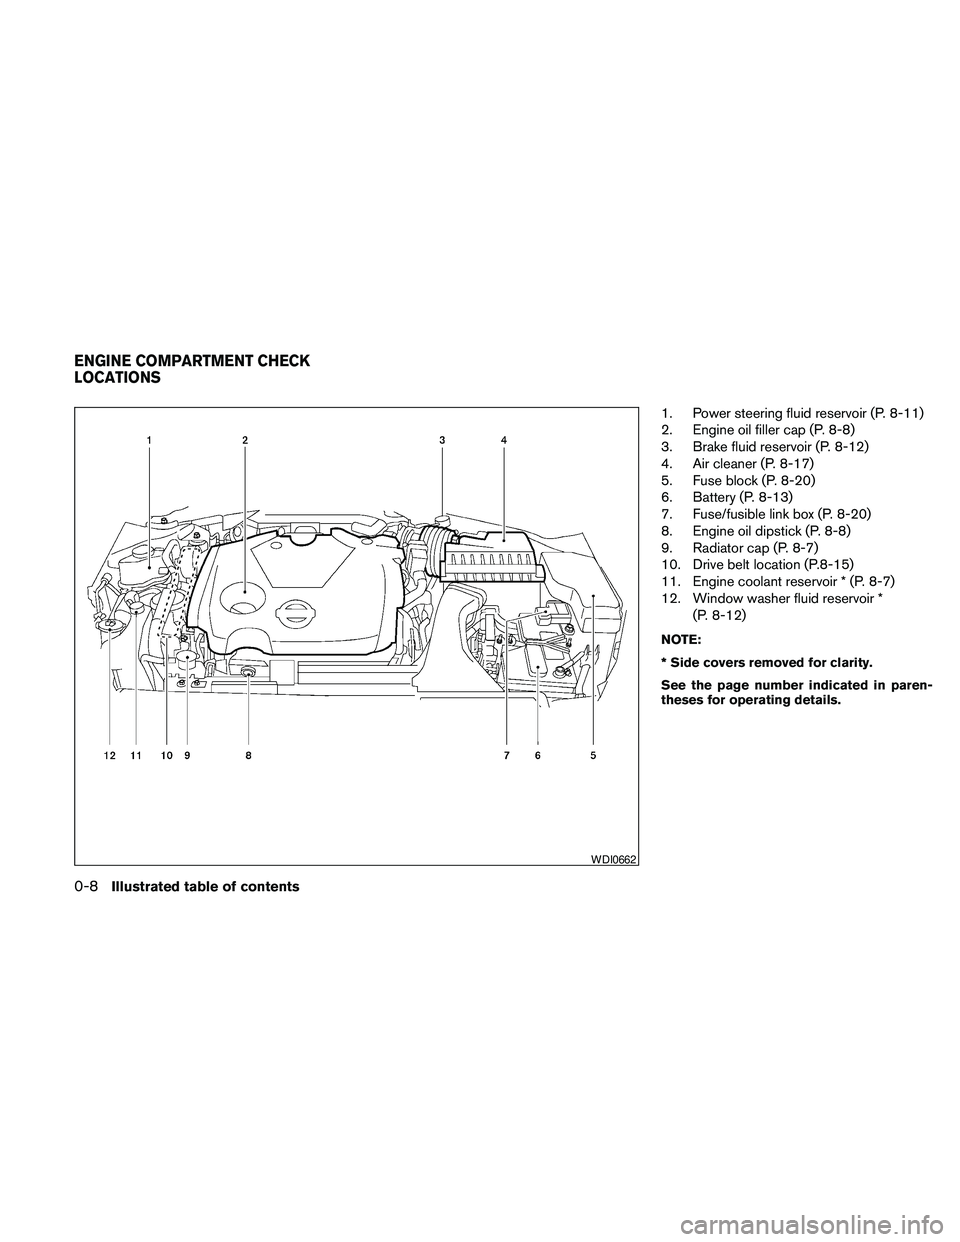 NISSAN MAXIMA 2010  Owner´s Manual 1. Power steering fluid reservoir (P. 8-11)
2. Engine oil filler cap (P. 8-8)
3. Brake fluid reservoir (P. 8-12)
4. Air cleaner (P. 8-17)
5. Fuse block (P. 8-20)
6. Battery (P. 8-13)
7. Fuse/fusible l